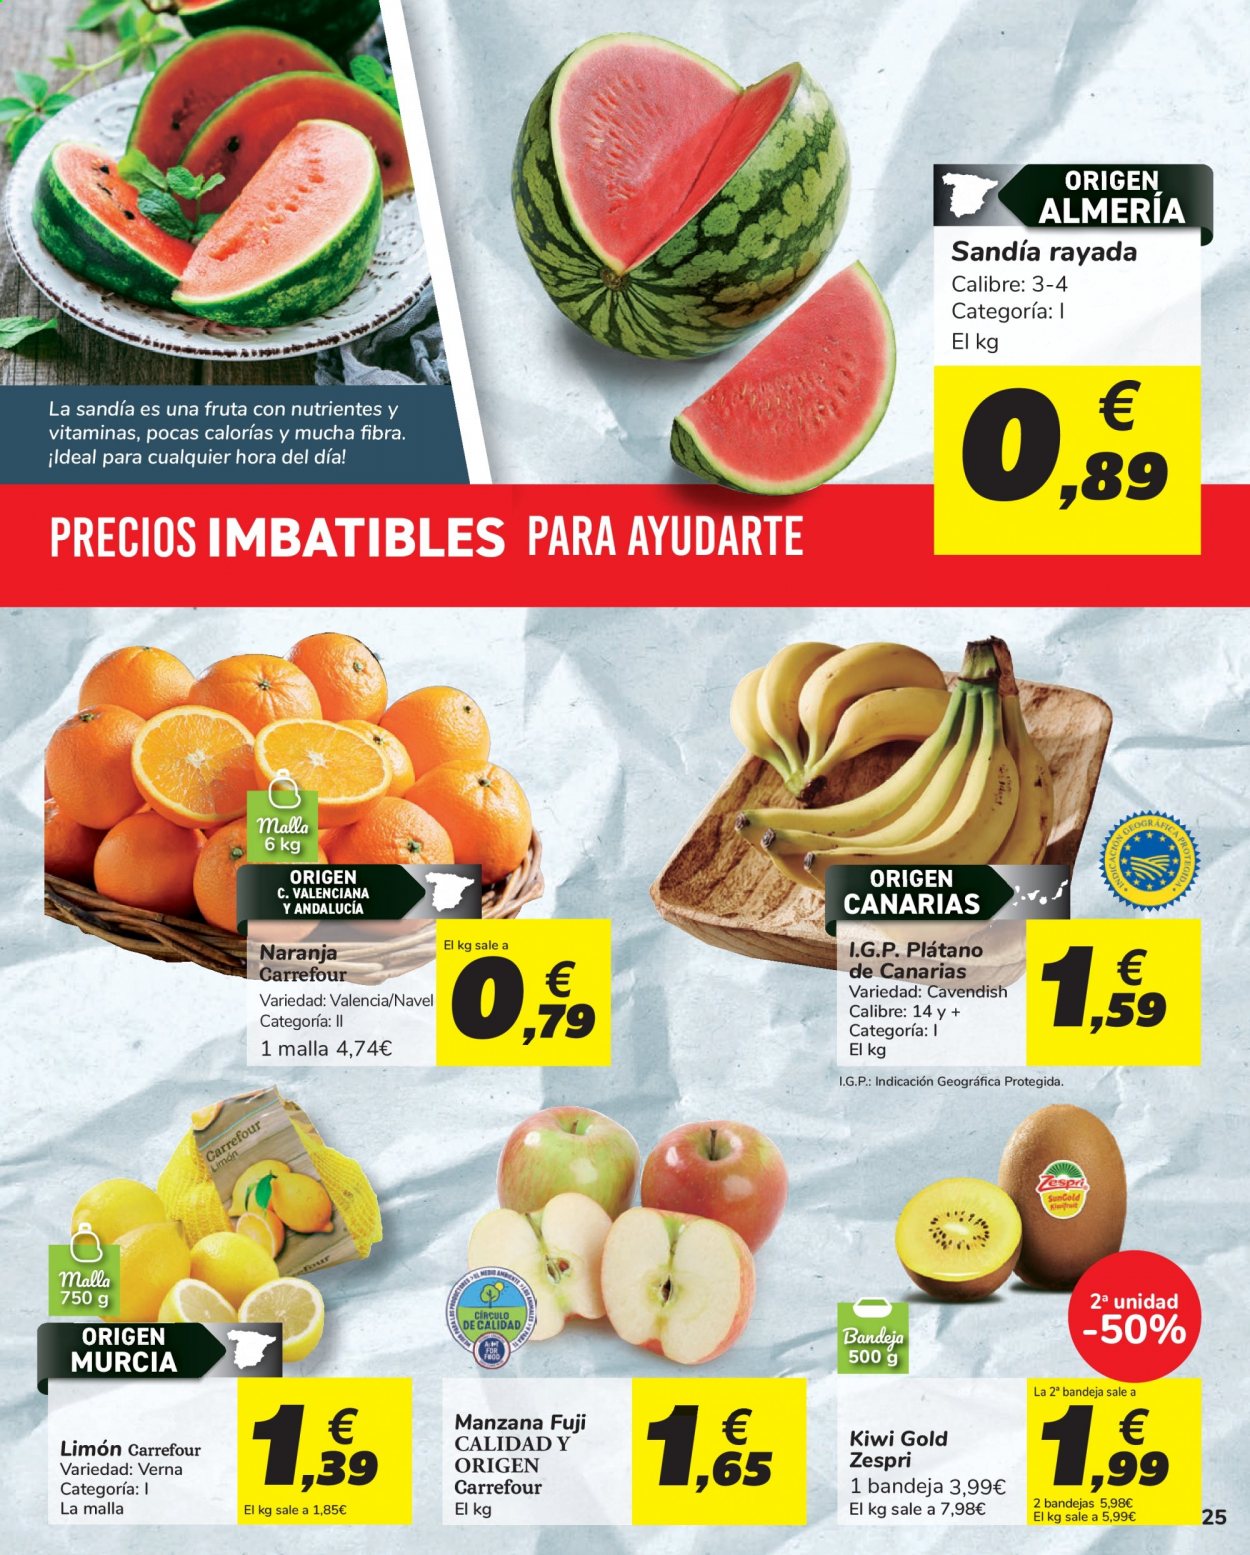 thumbnail - Folleto actual Carrefour - 11/05/21 - 24/05/21 - Ventas - kiwi, limón, manzanas, naranja, plátano. Página 25.